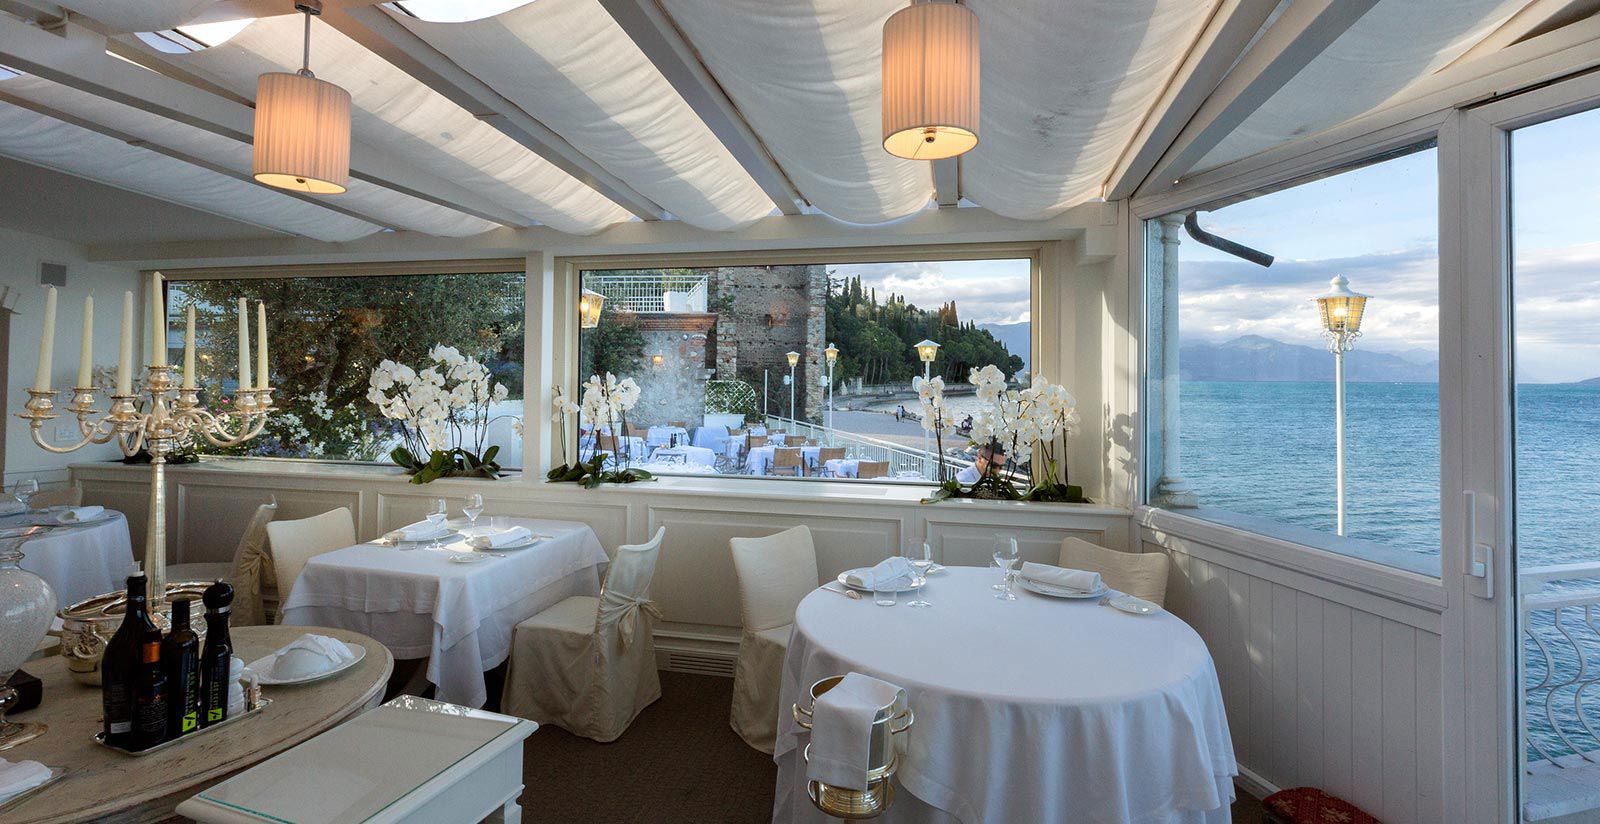 Location per matrimonio sul Lago di Garda 6